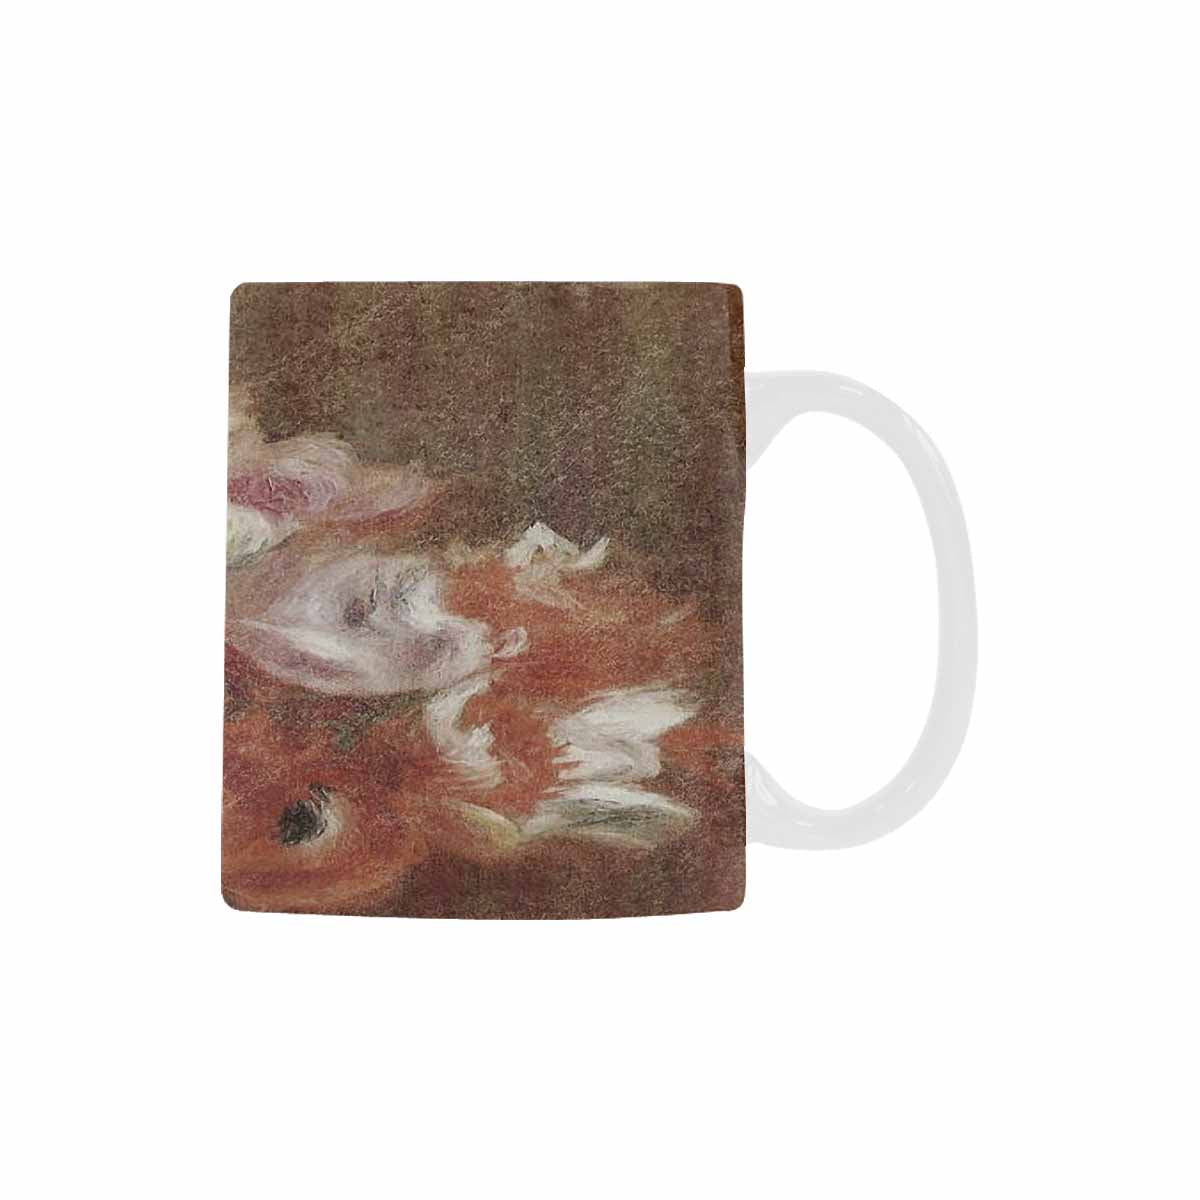 Vintage floral coffee mug or tea cup, Design 15